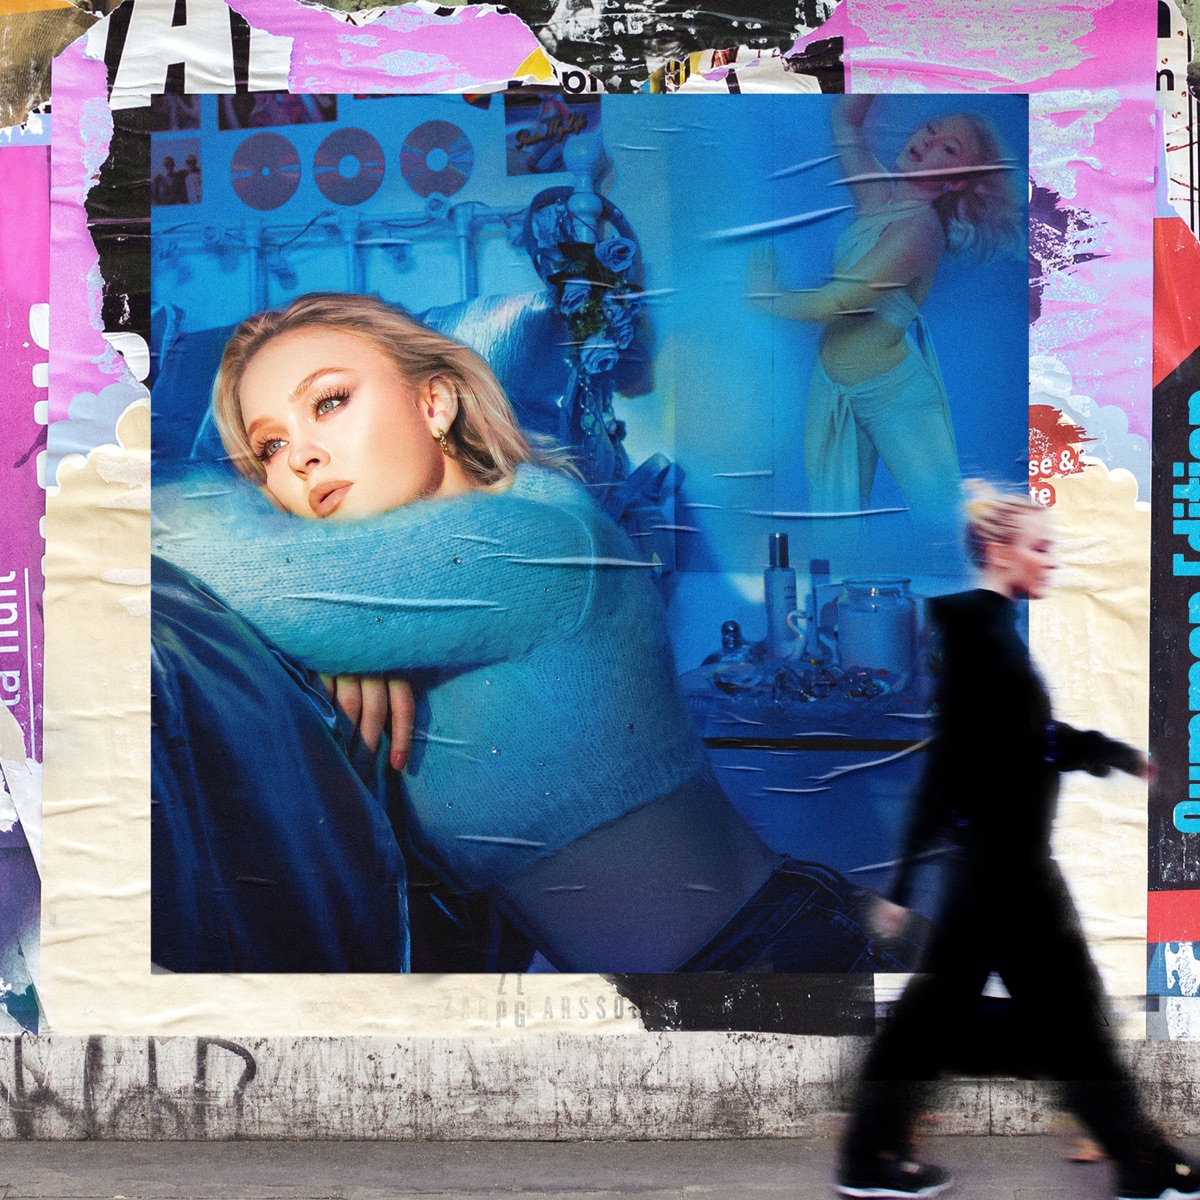 Poster Girl by Zara Larsson on Apple Music